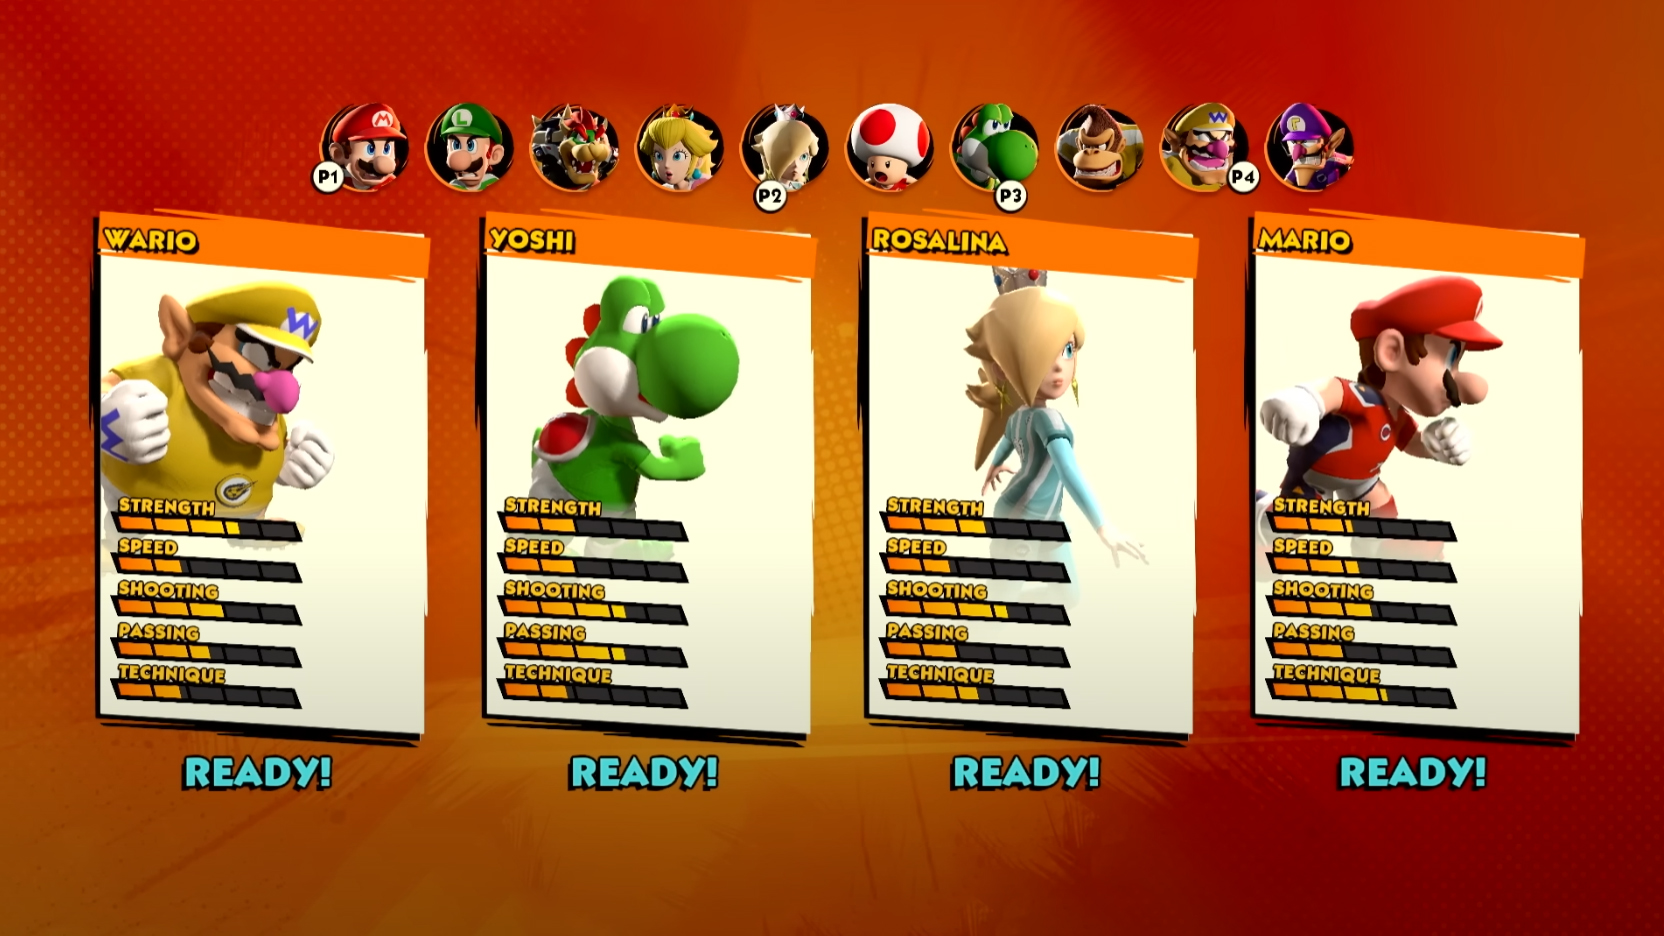 Mario Strikes Battle League Team Character Stats Wario Yoshi Rosalina Mario